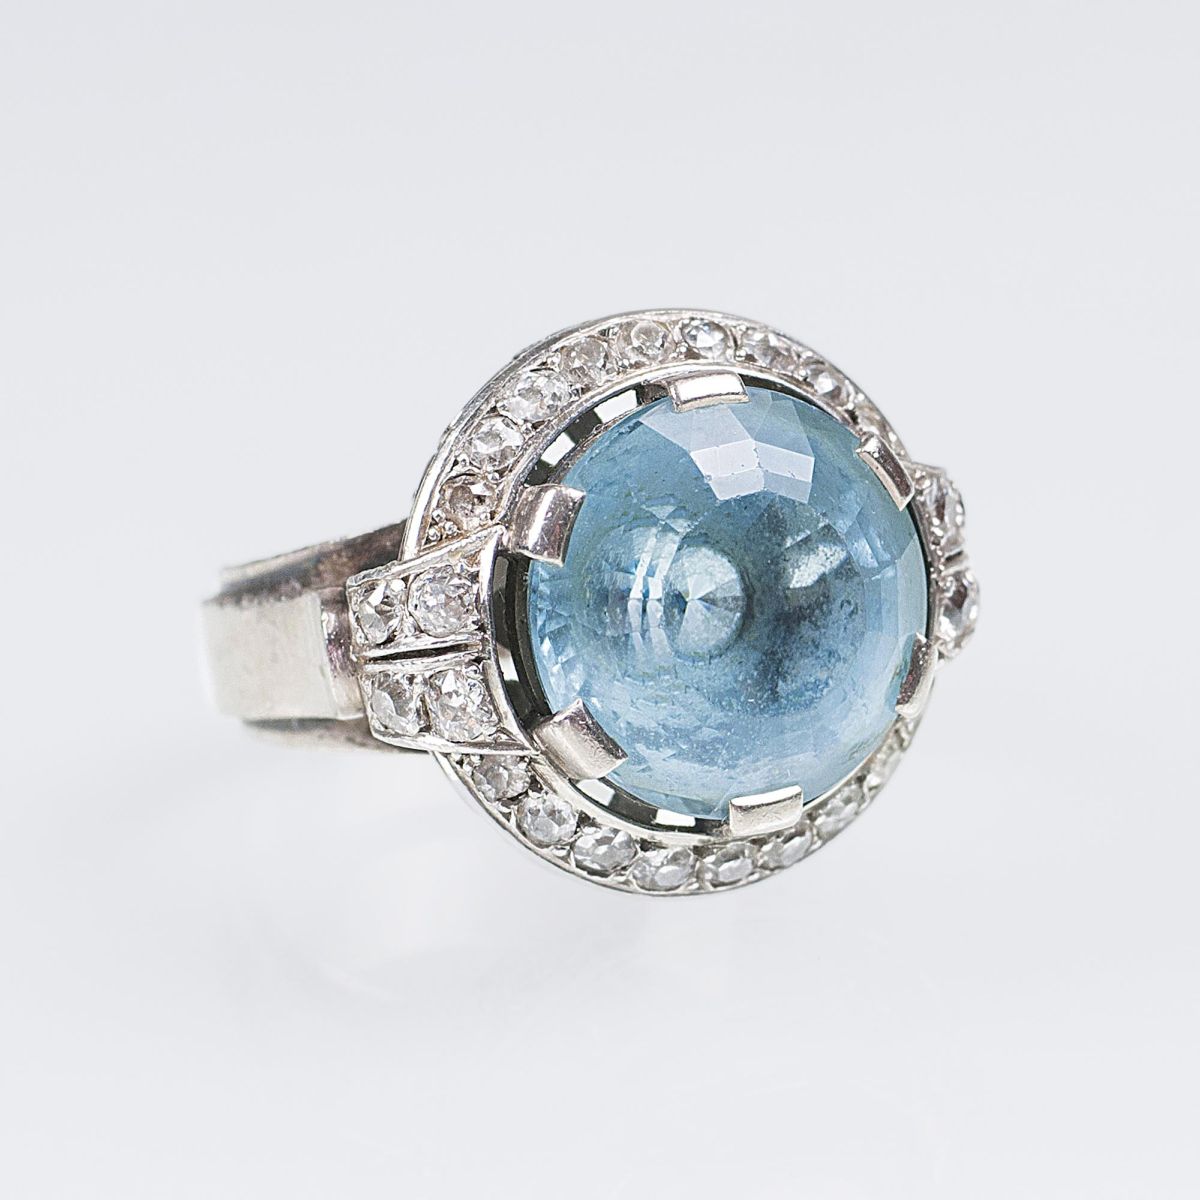 An Art-déco Aquamarine Diamond Ring